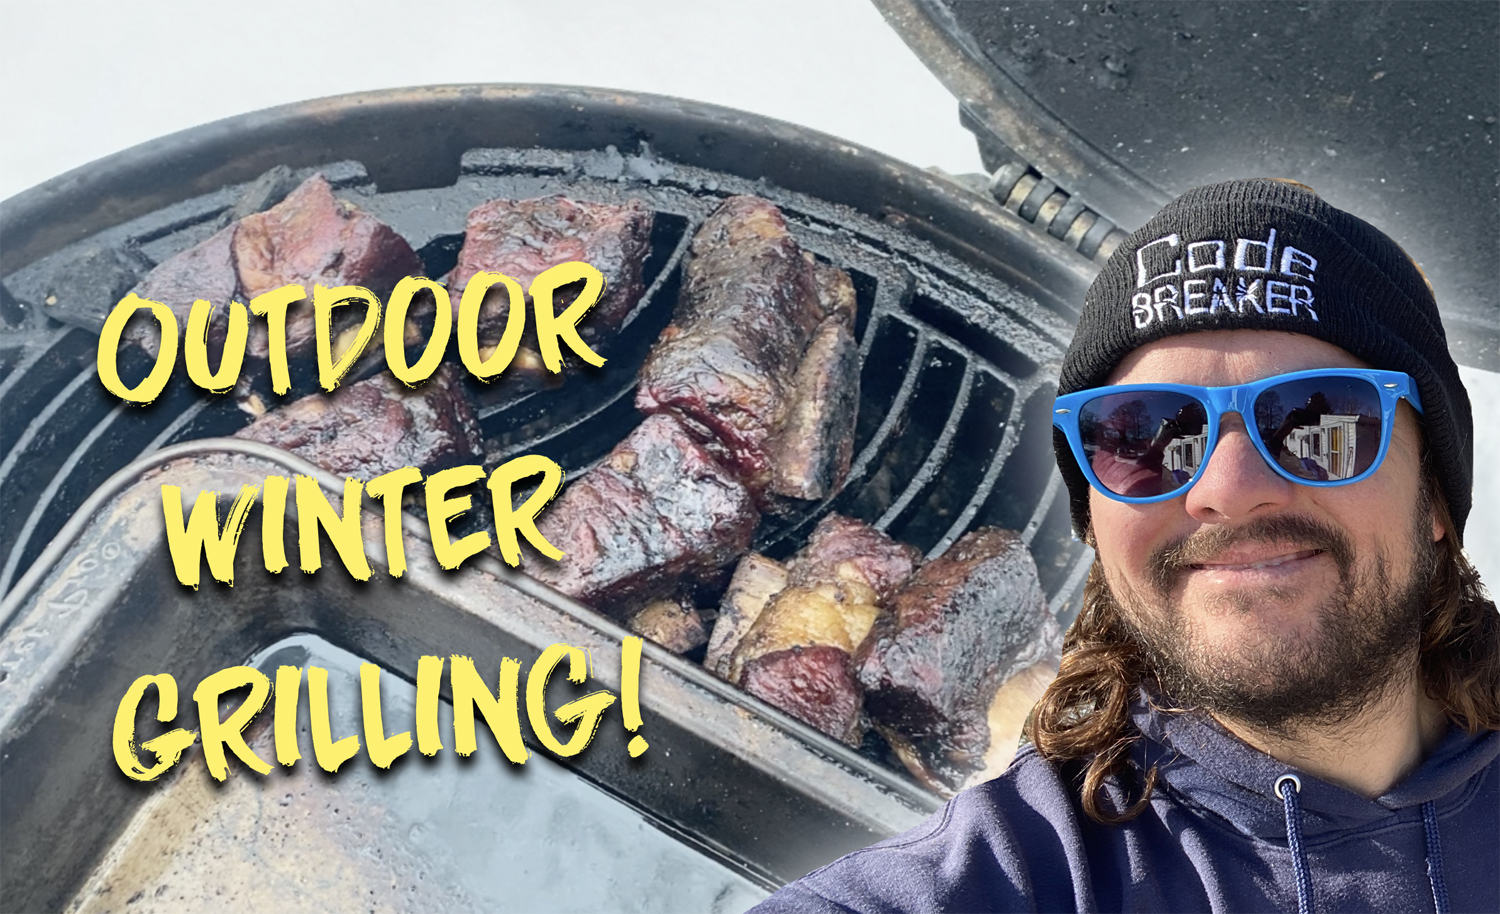 Outdoor Winter Grilling!